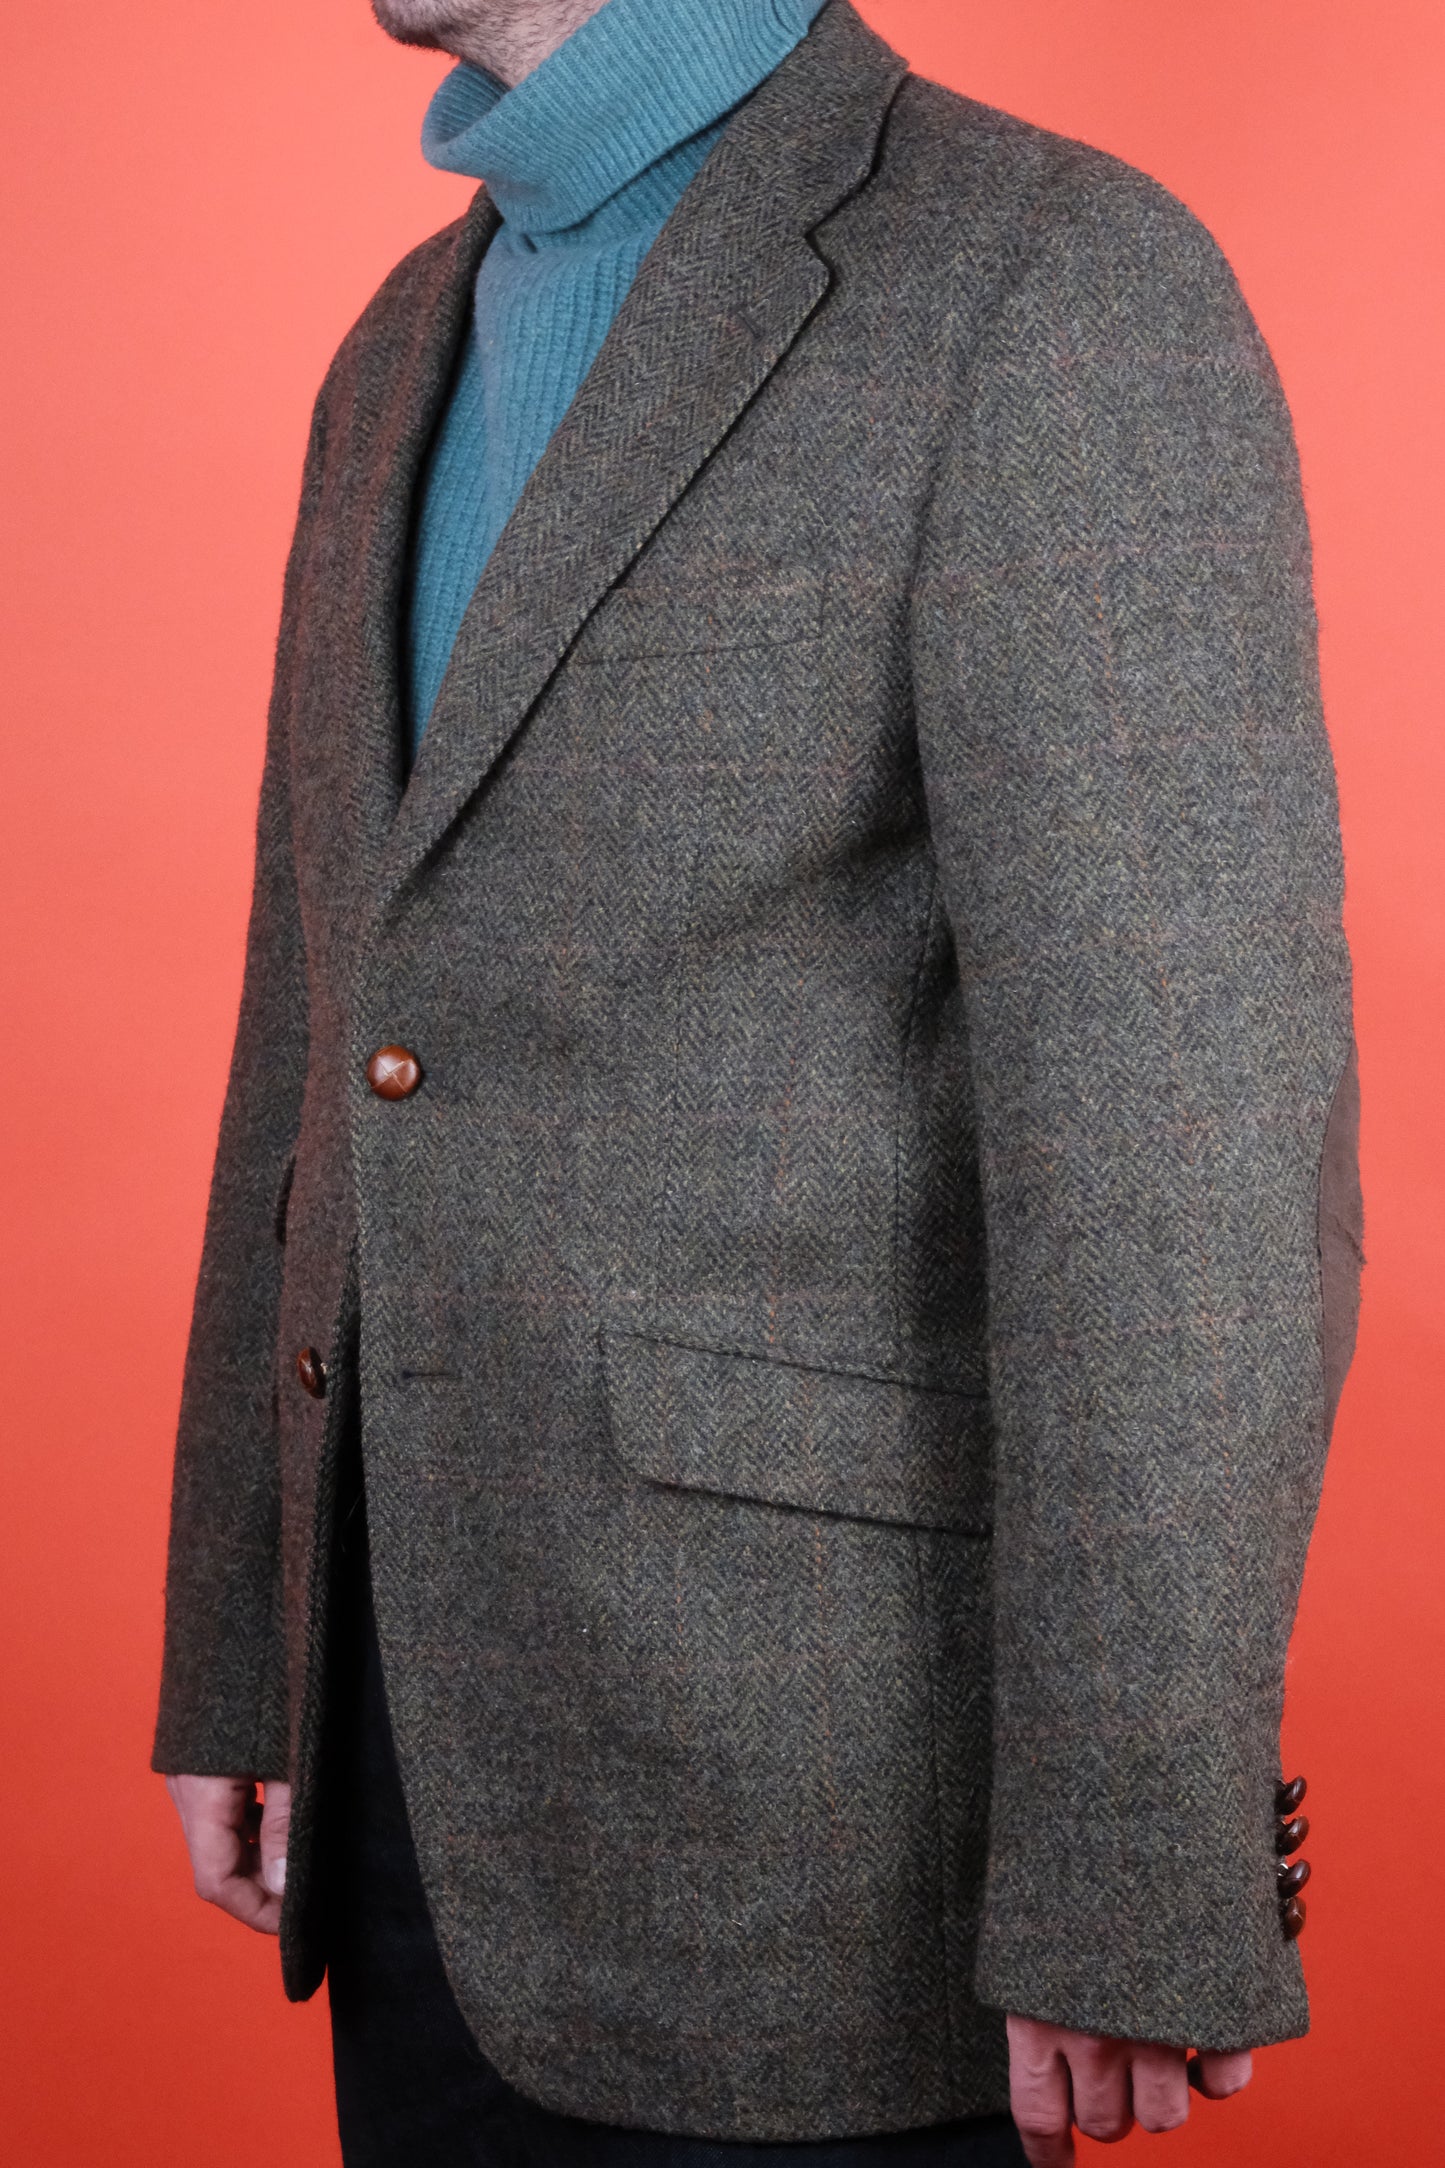 J. Phillip Harris Tweed Suit Jacket 'L' - vintage clothing clochard92.com